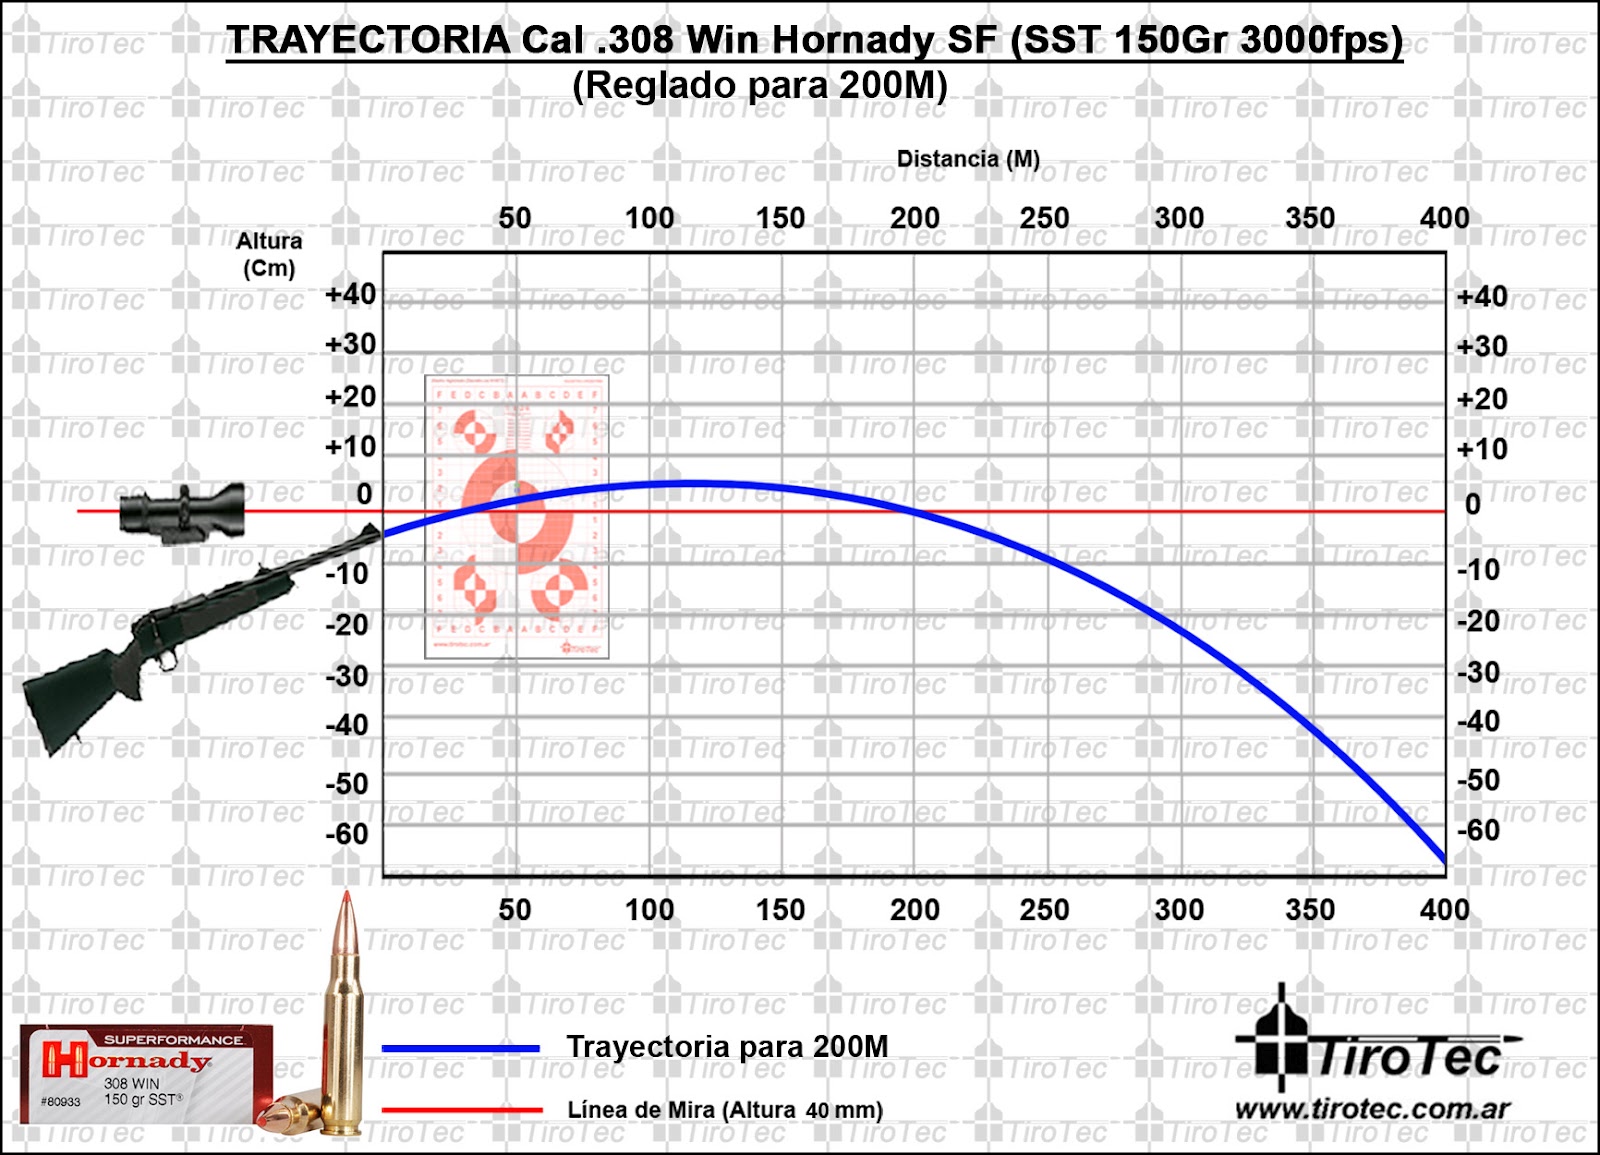 Tirotec: Calibre 308 Win Hornady SUPERFORMANCE 150 Grain SST 3000fps